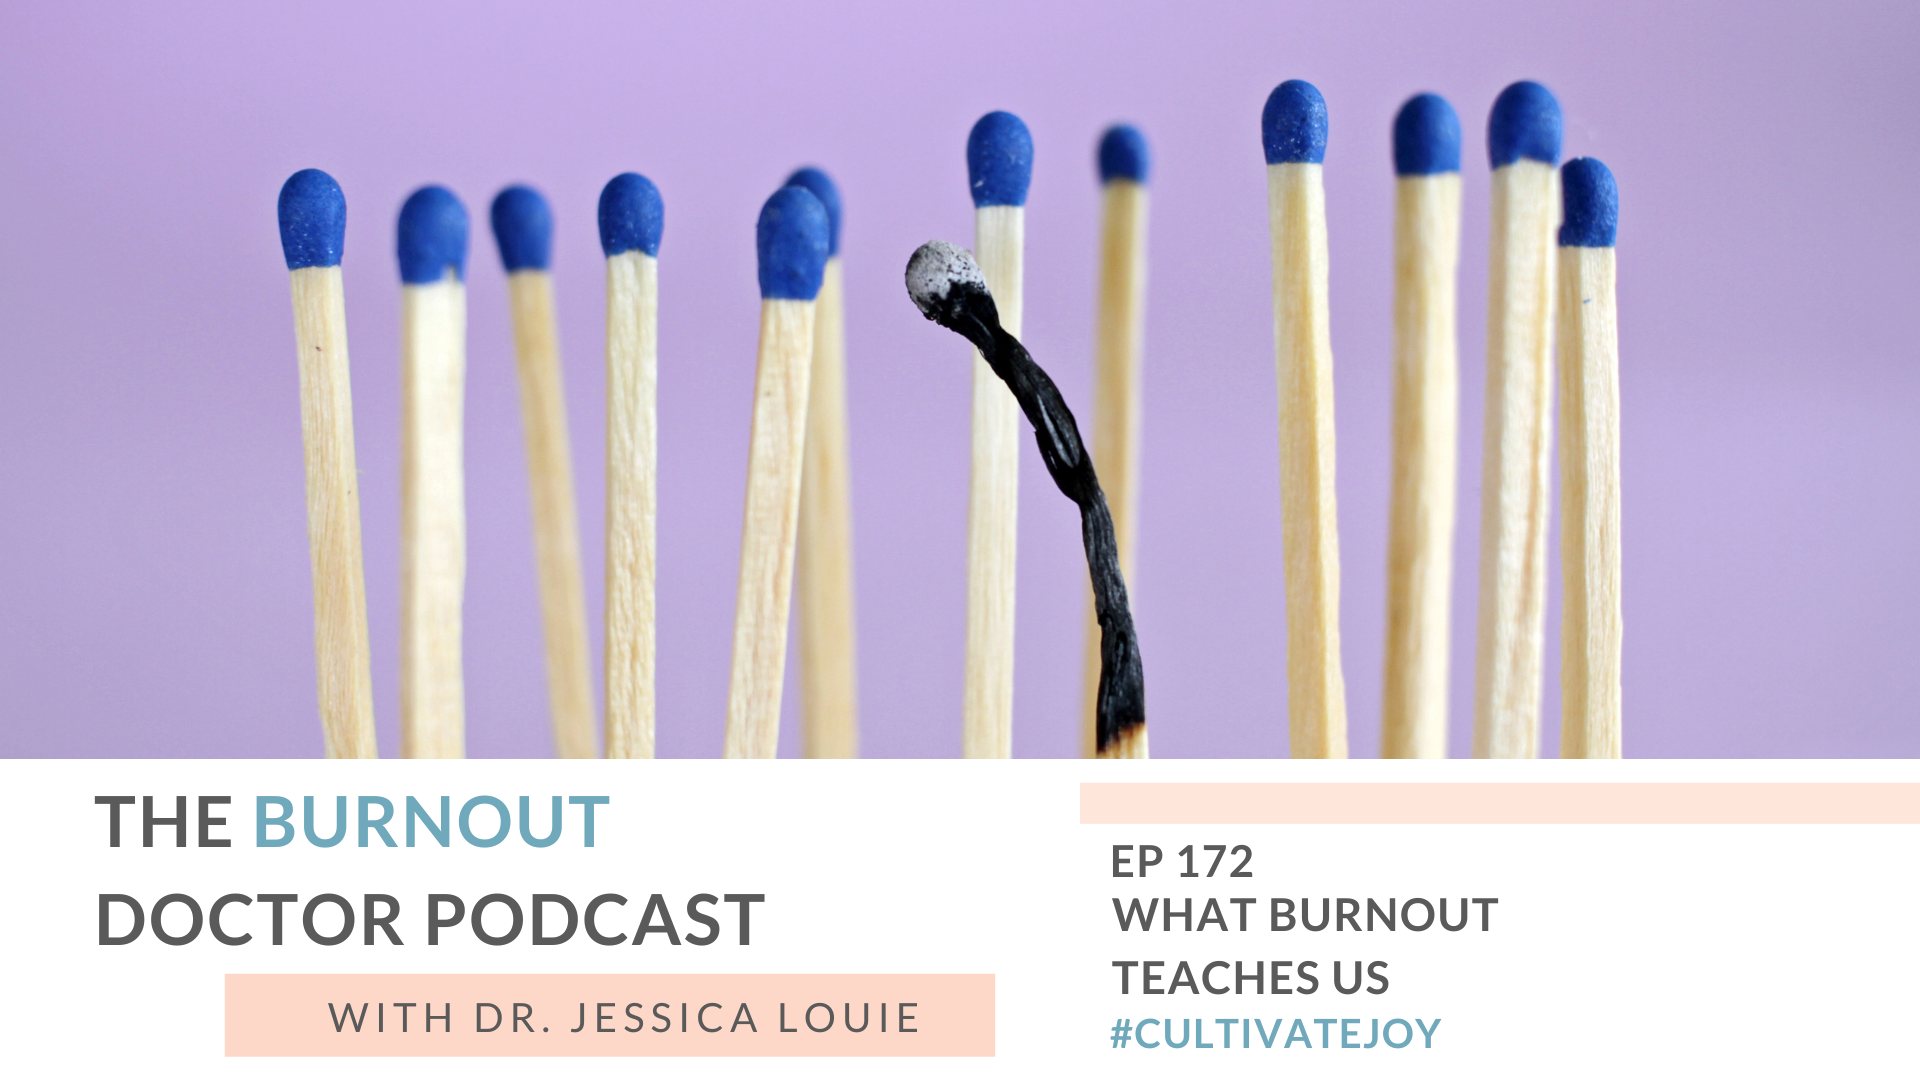 4 things burnout teaches us. Pharmacist burnout. The Burnout Doctor Podcast. Dr. Jessica Louie